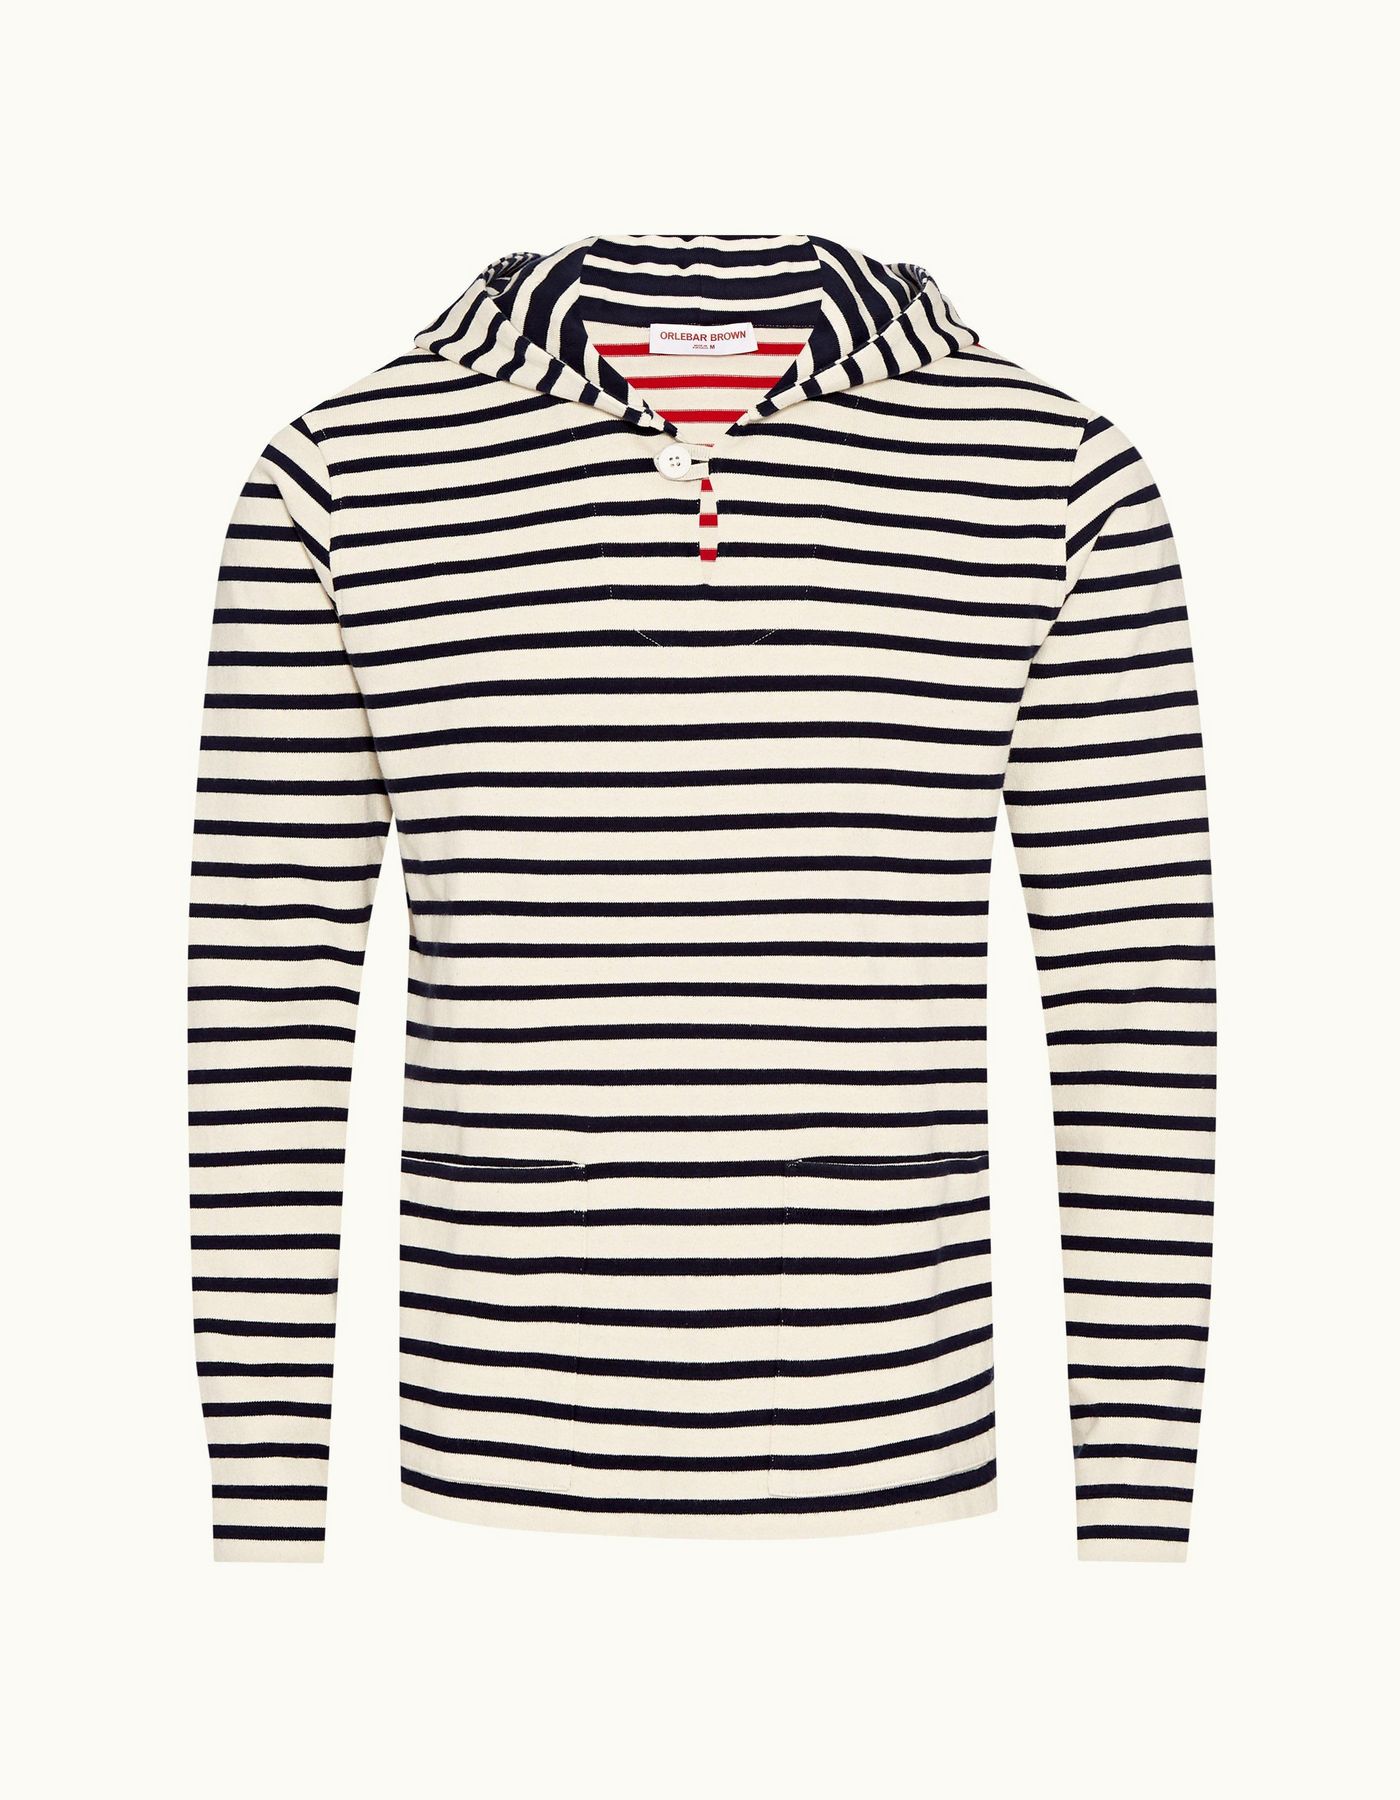 Blaine Stripe - Mens Navy/Summer Red Breton Stripe Relaxed Fit Hooded Sweatshirt